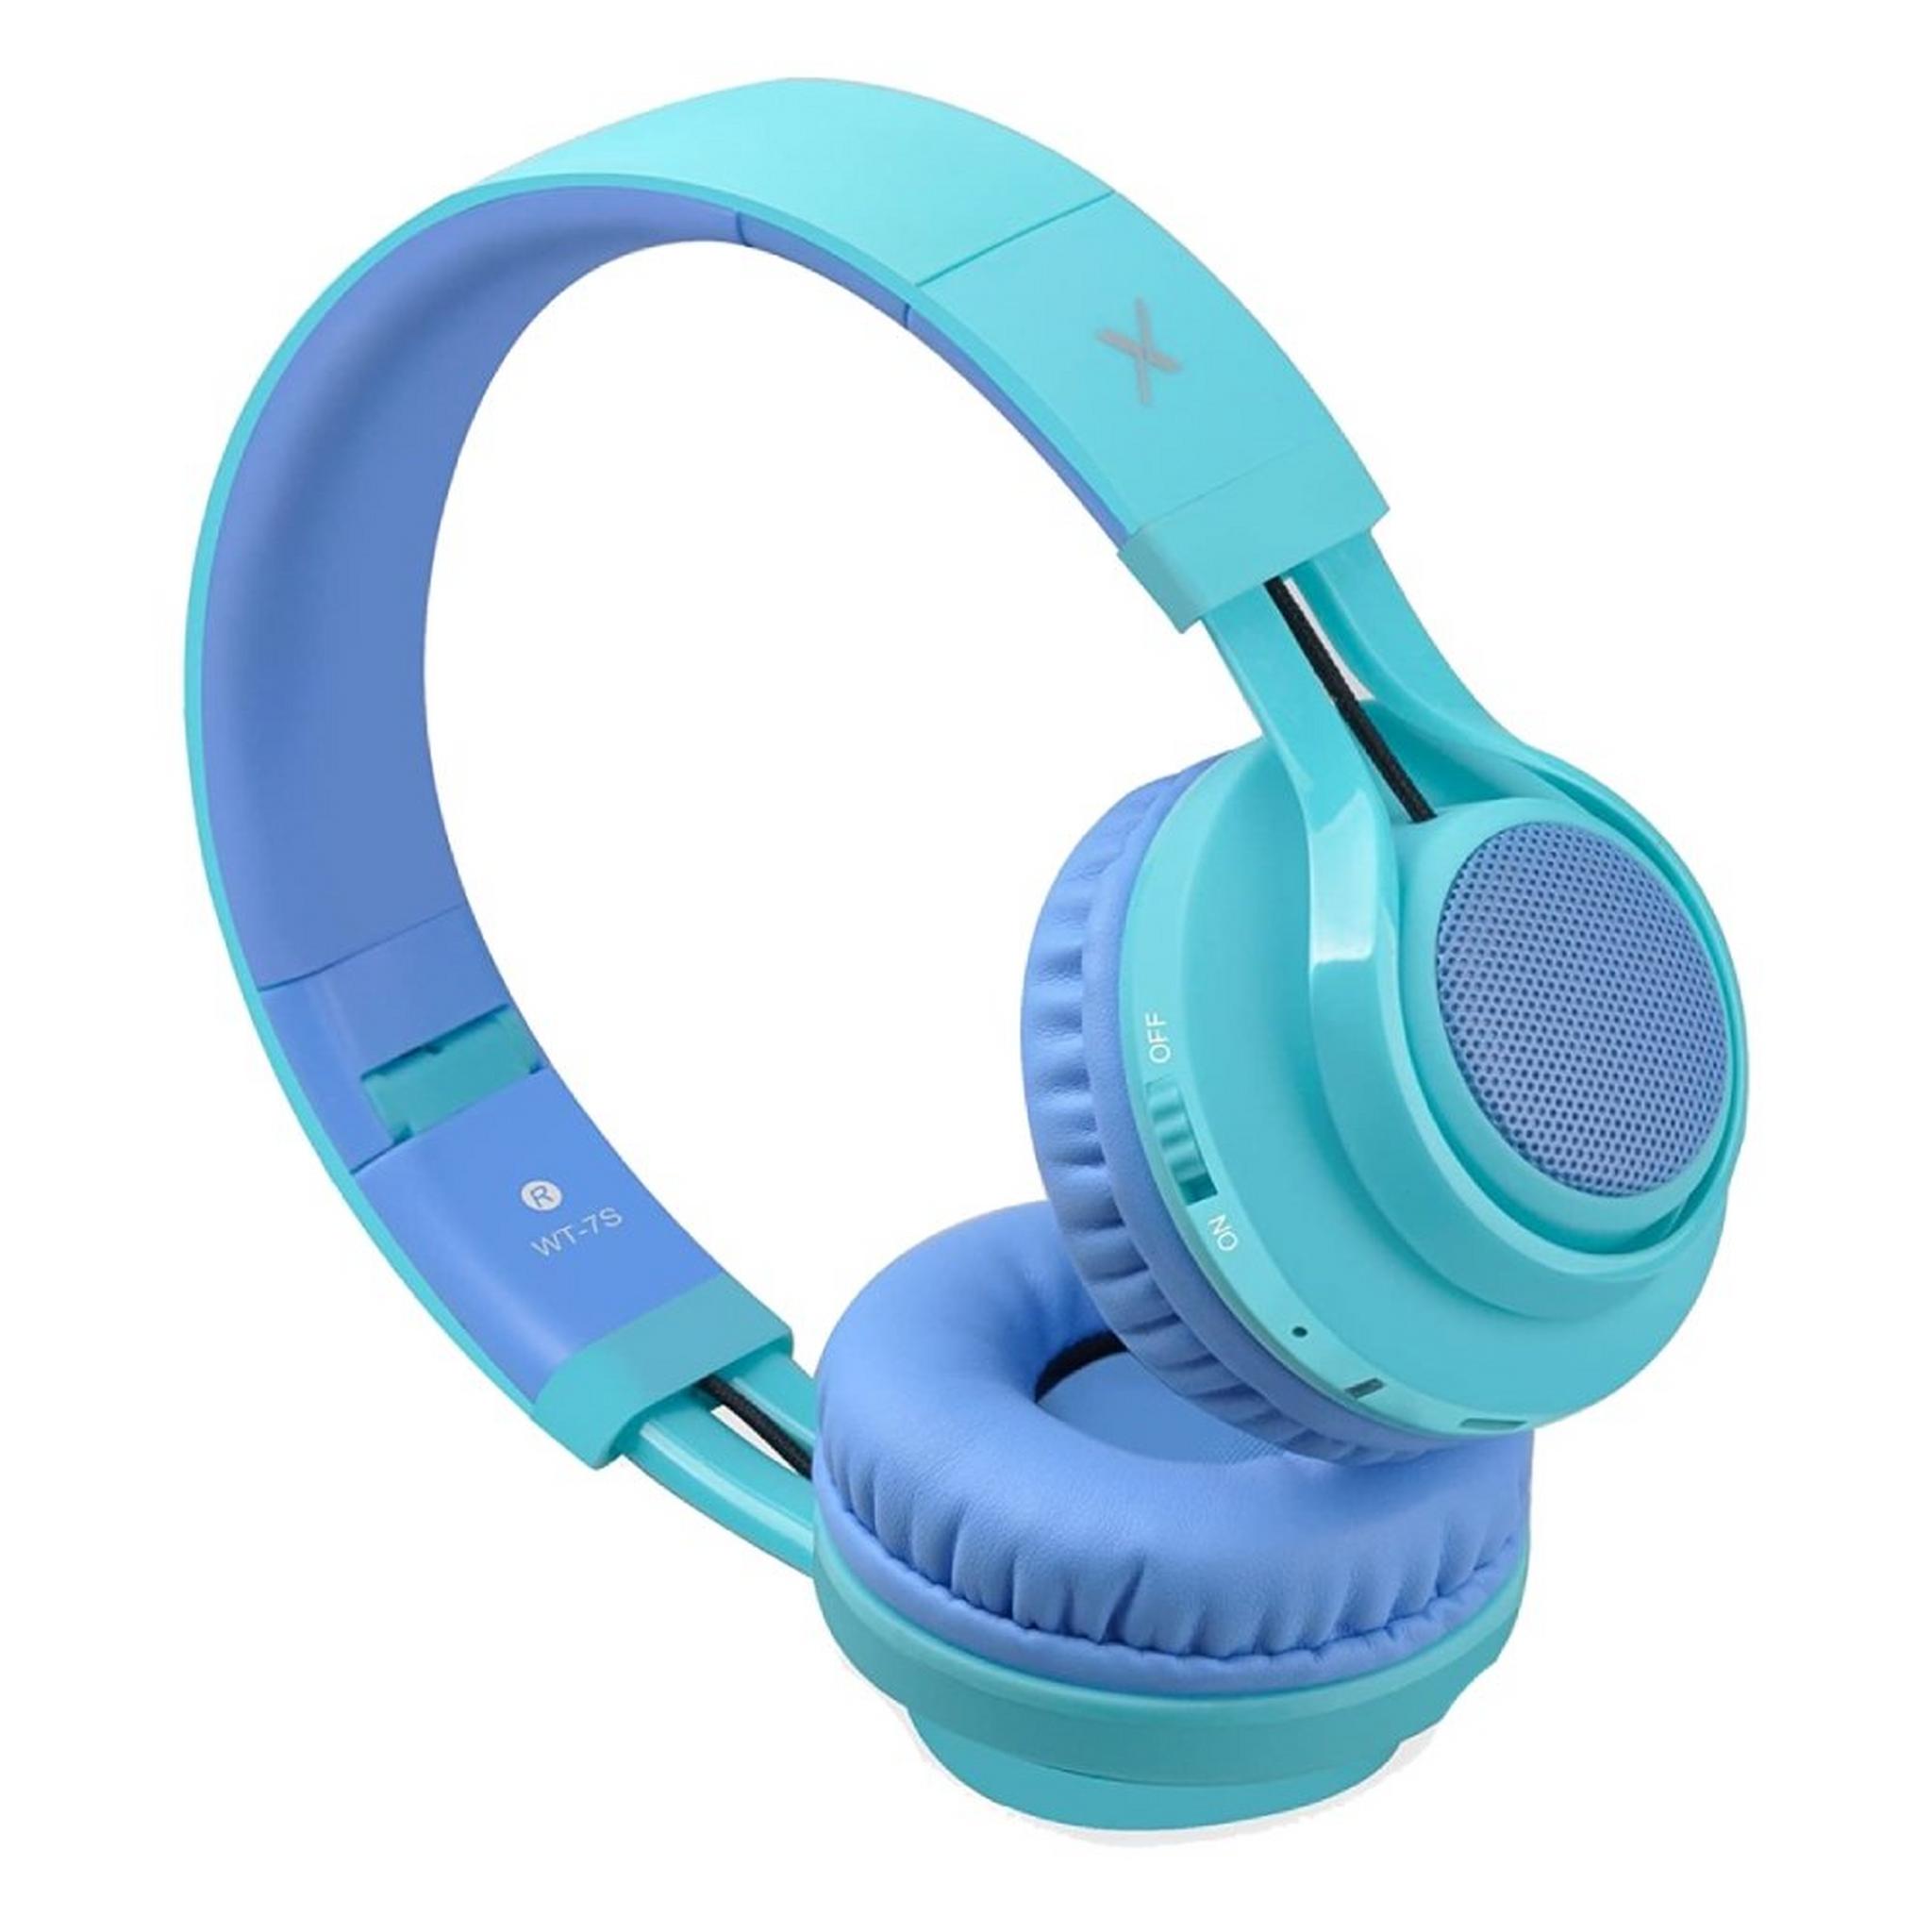 Riwbox Kids LED Wireless Headphones - Blue/Green